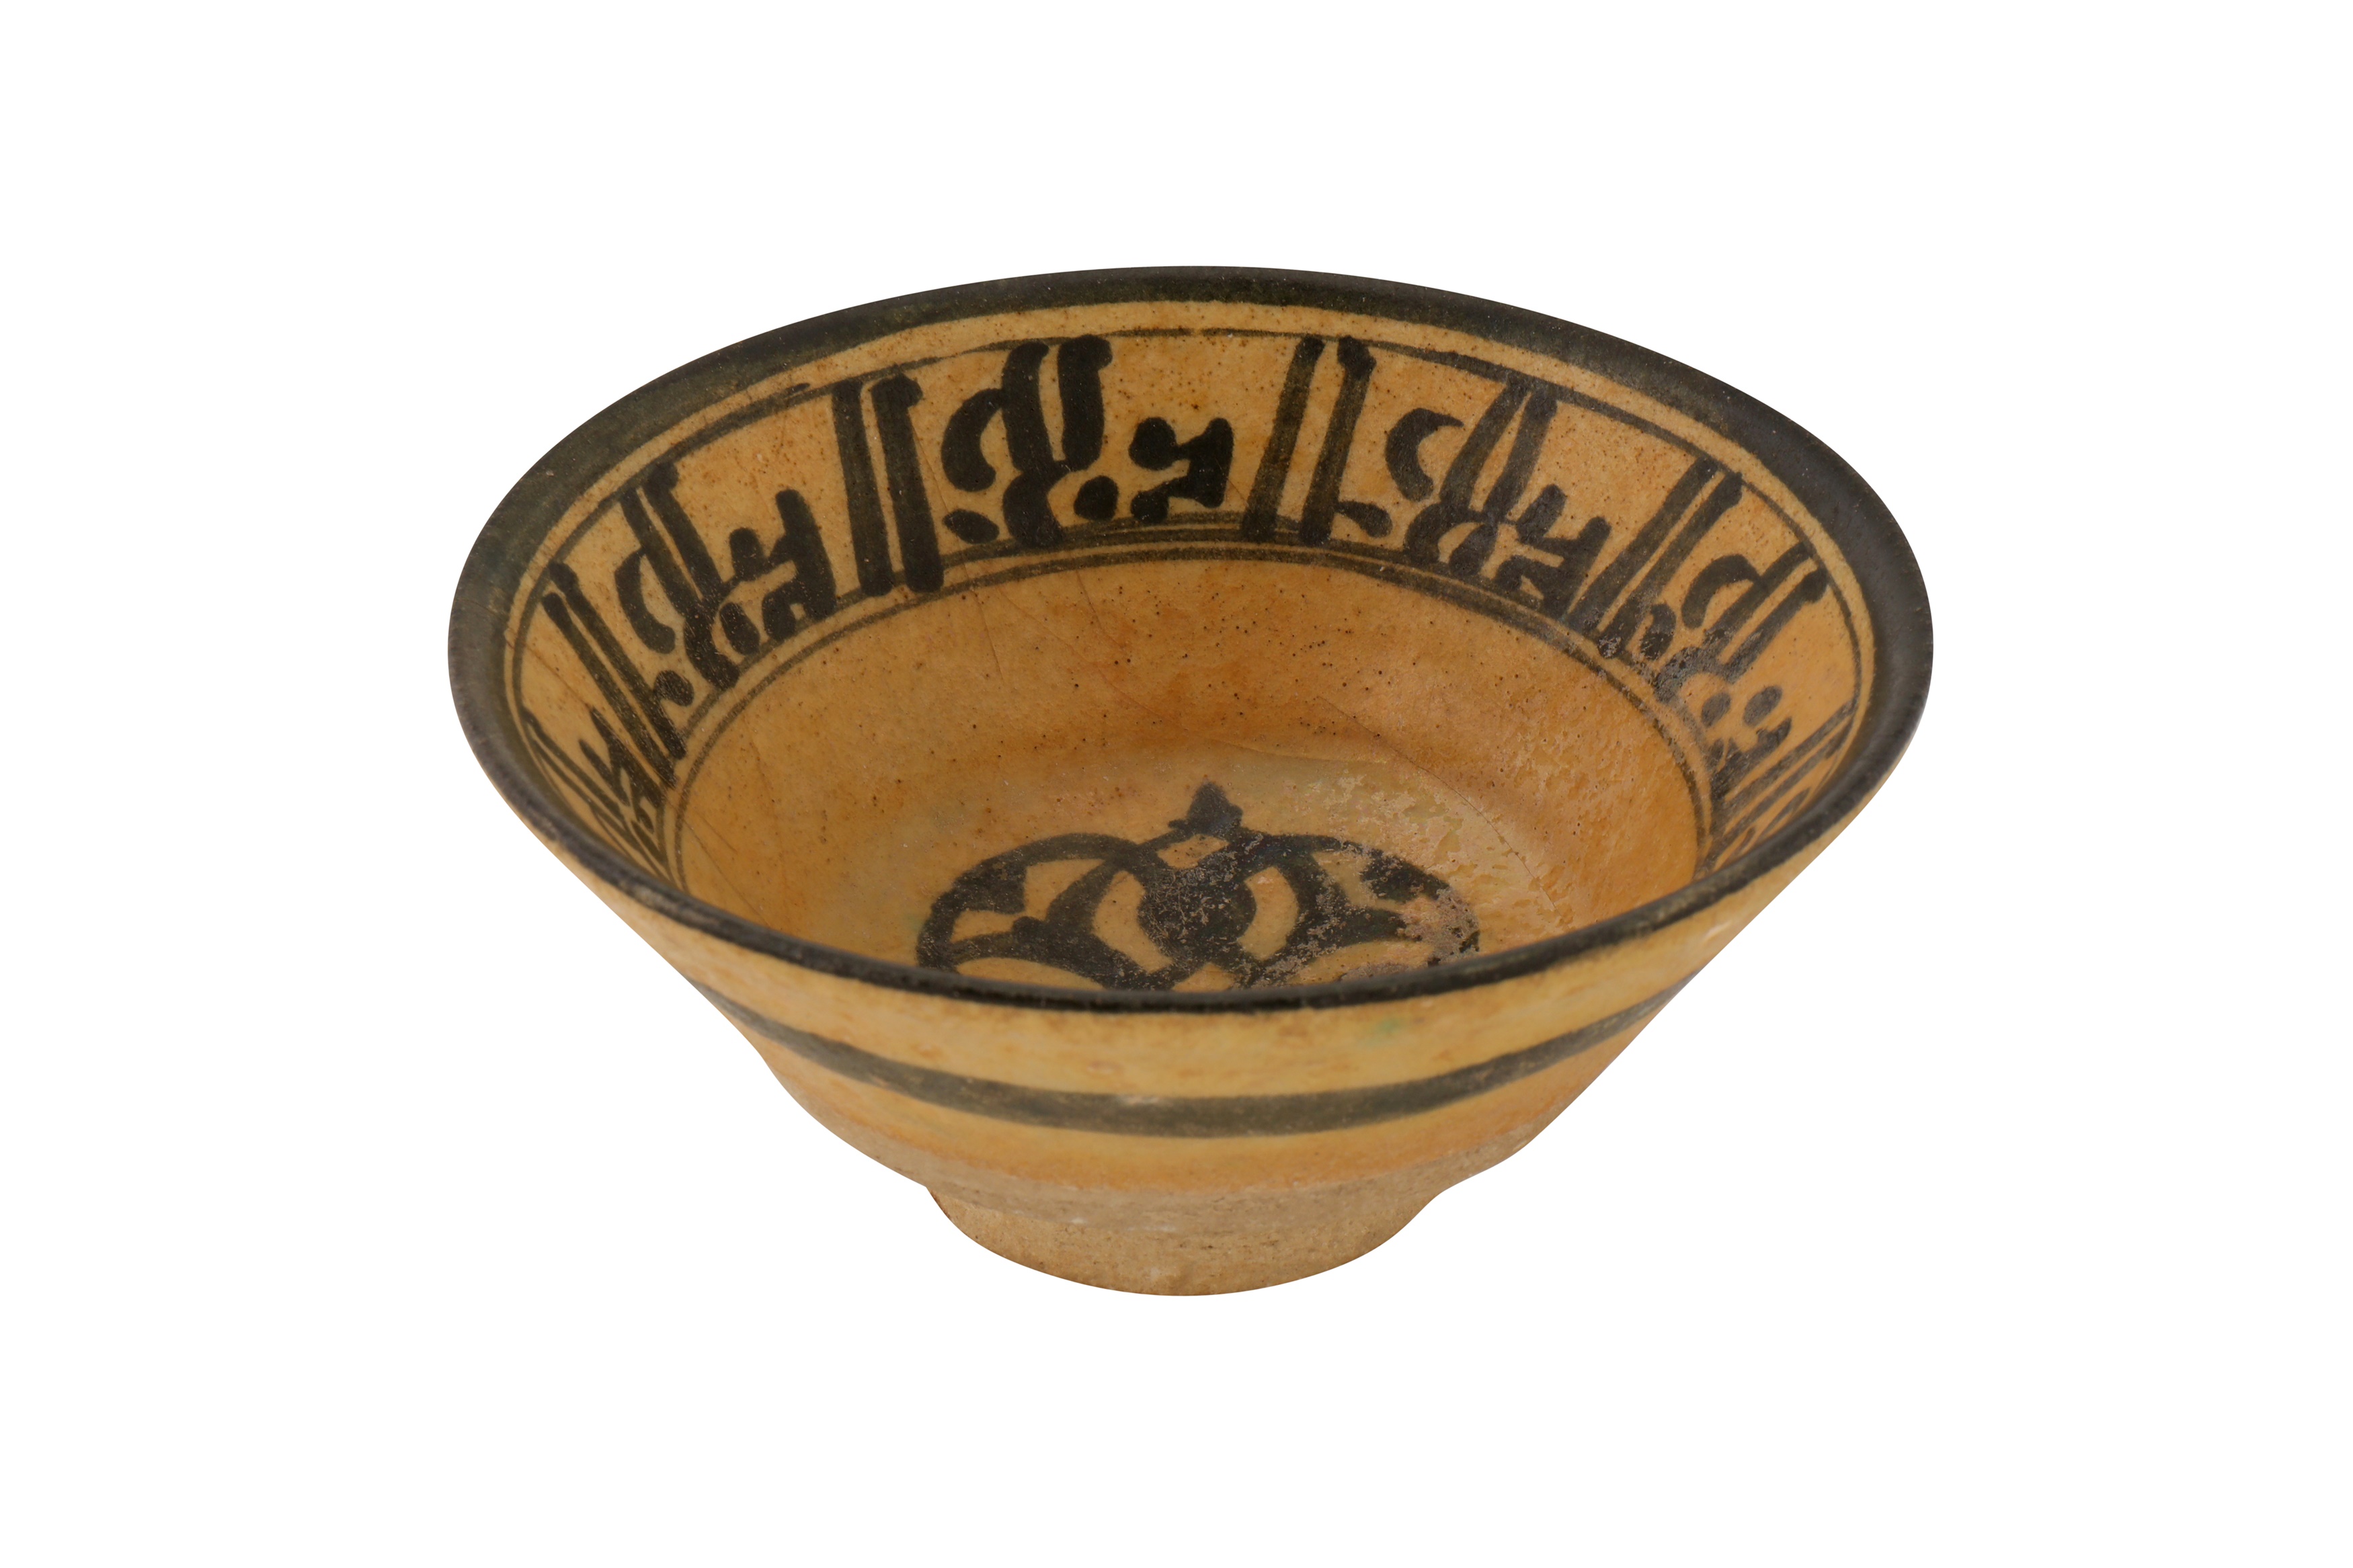 A 12TH-13TH CENTURY PERSIAN SELJUK GLAZED POTTERY BOWL - Image 4 of 5